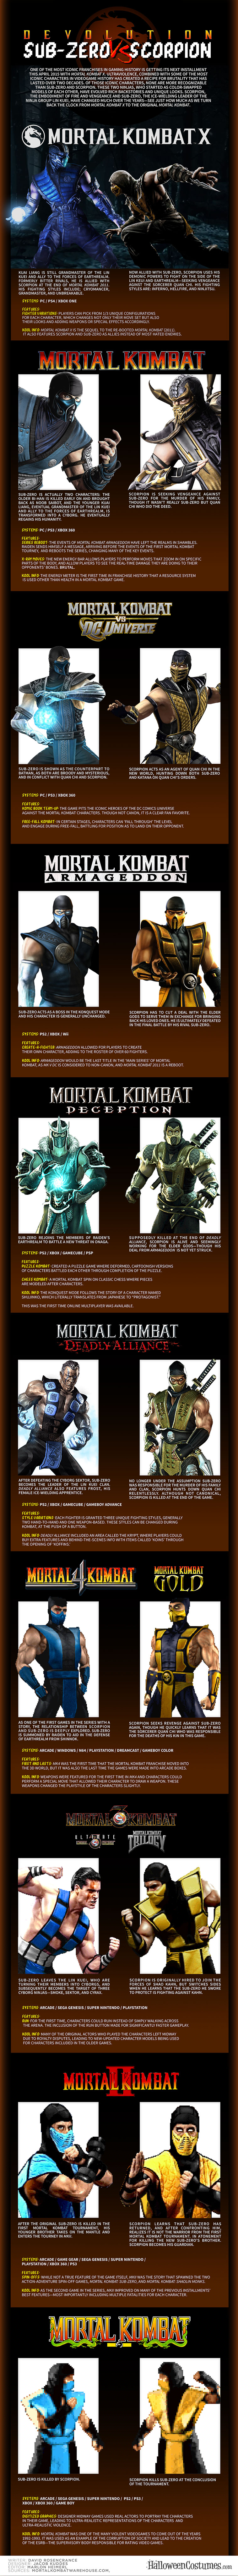 Mortal Kombat X Infographic Header Scorpion Sub-Zero